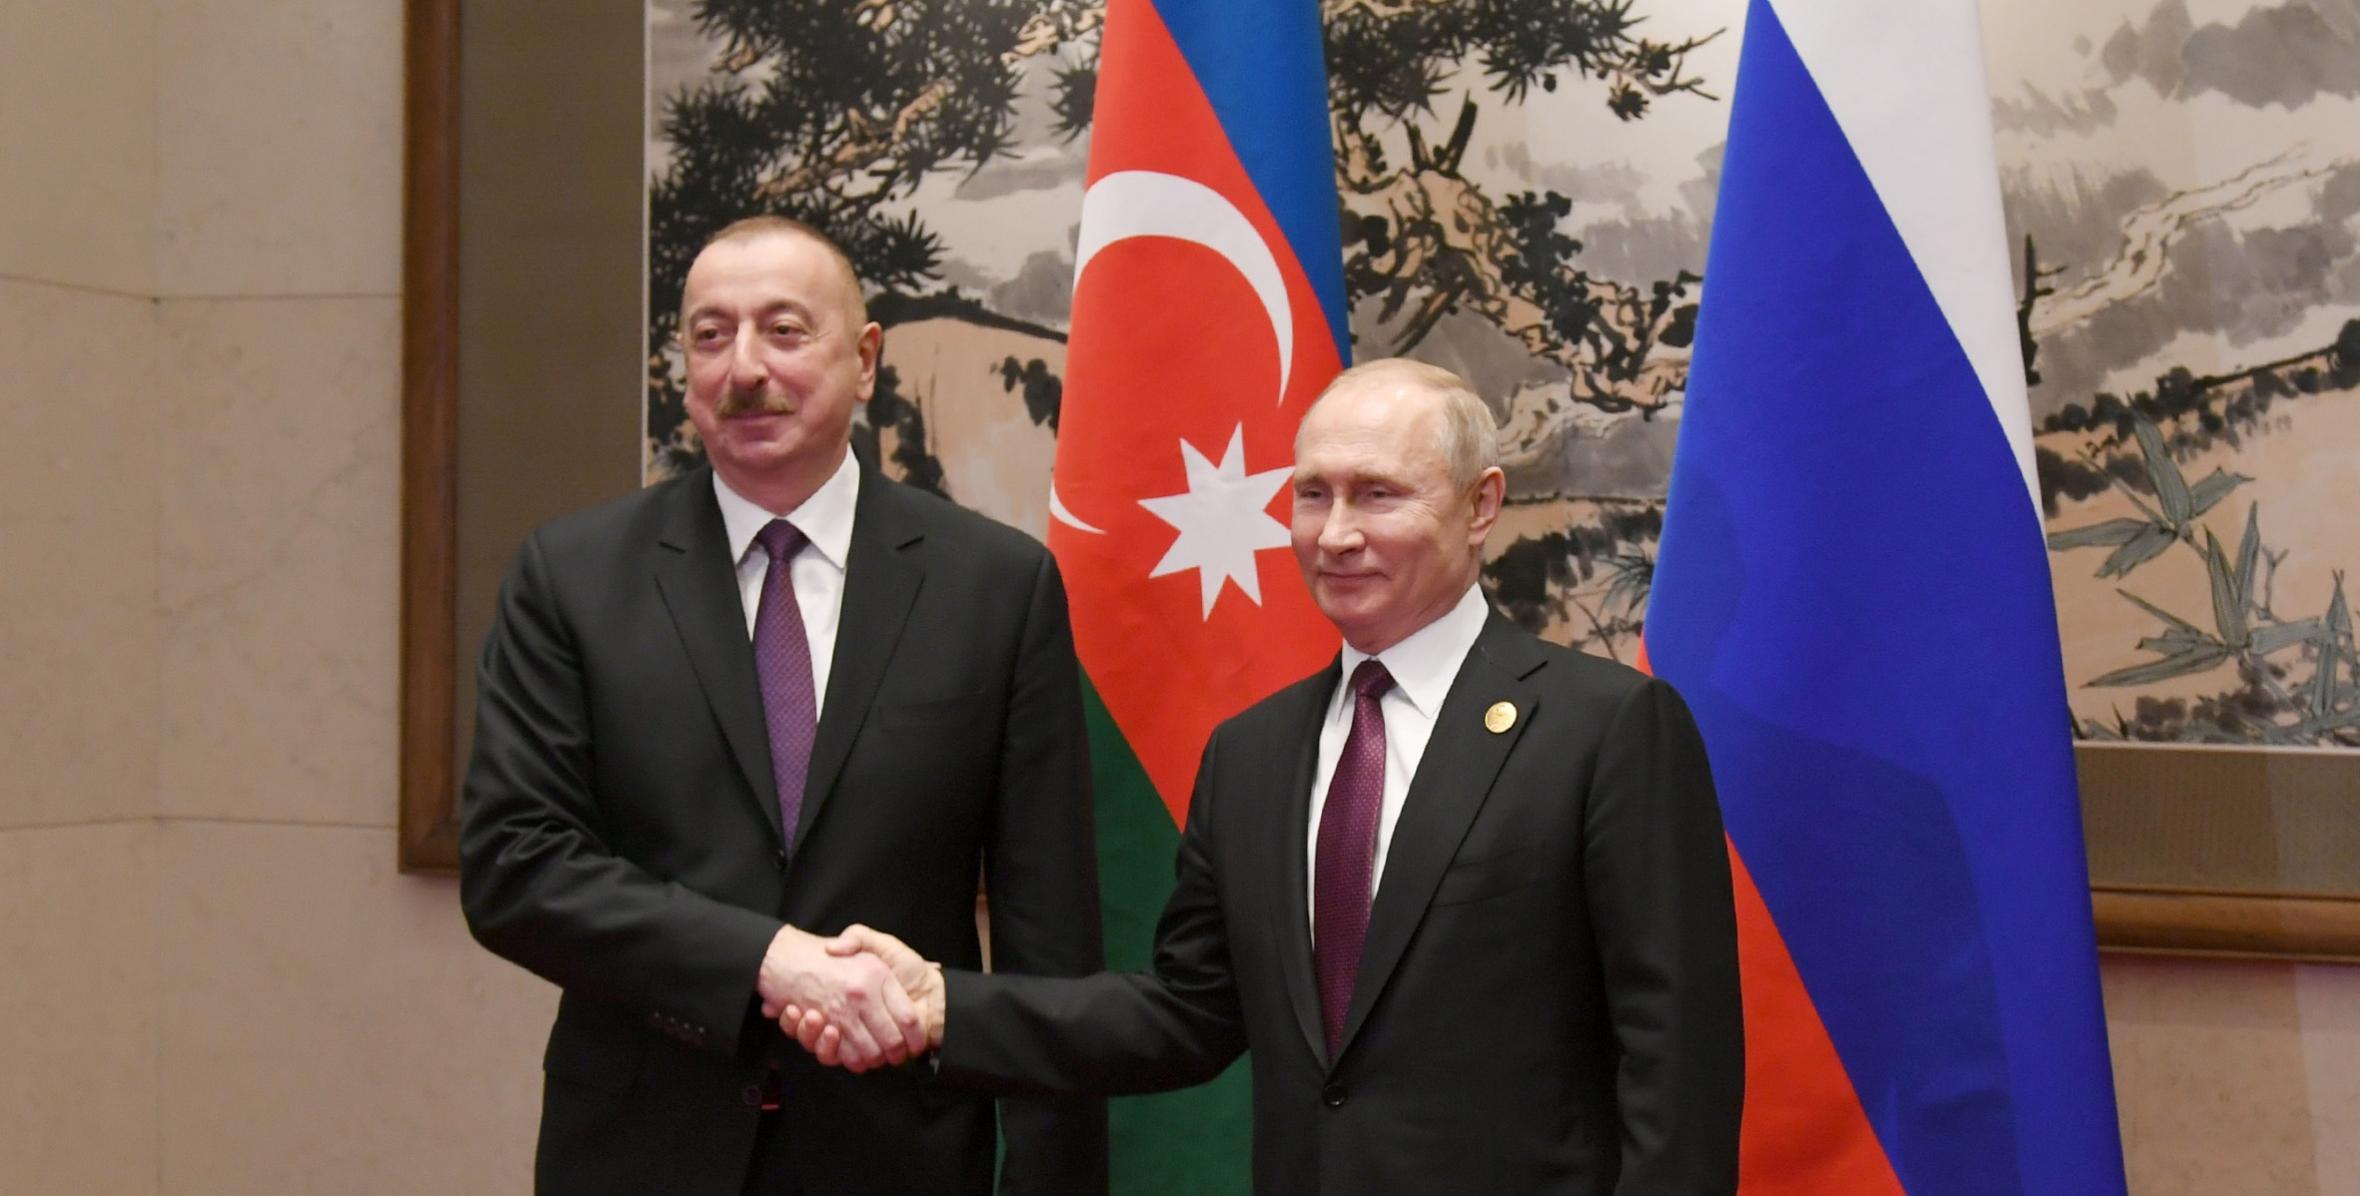 Ilham Aliyev met with Russian President Vladimir Putin in Beijing